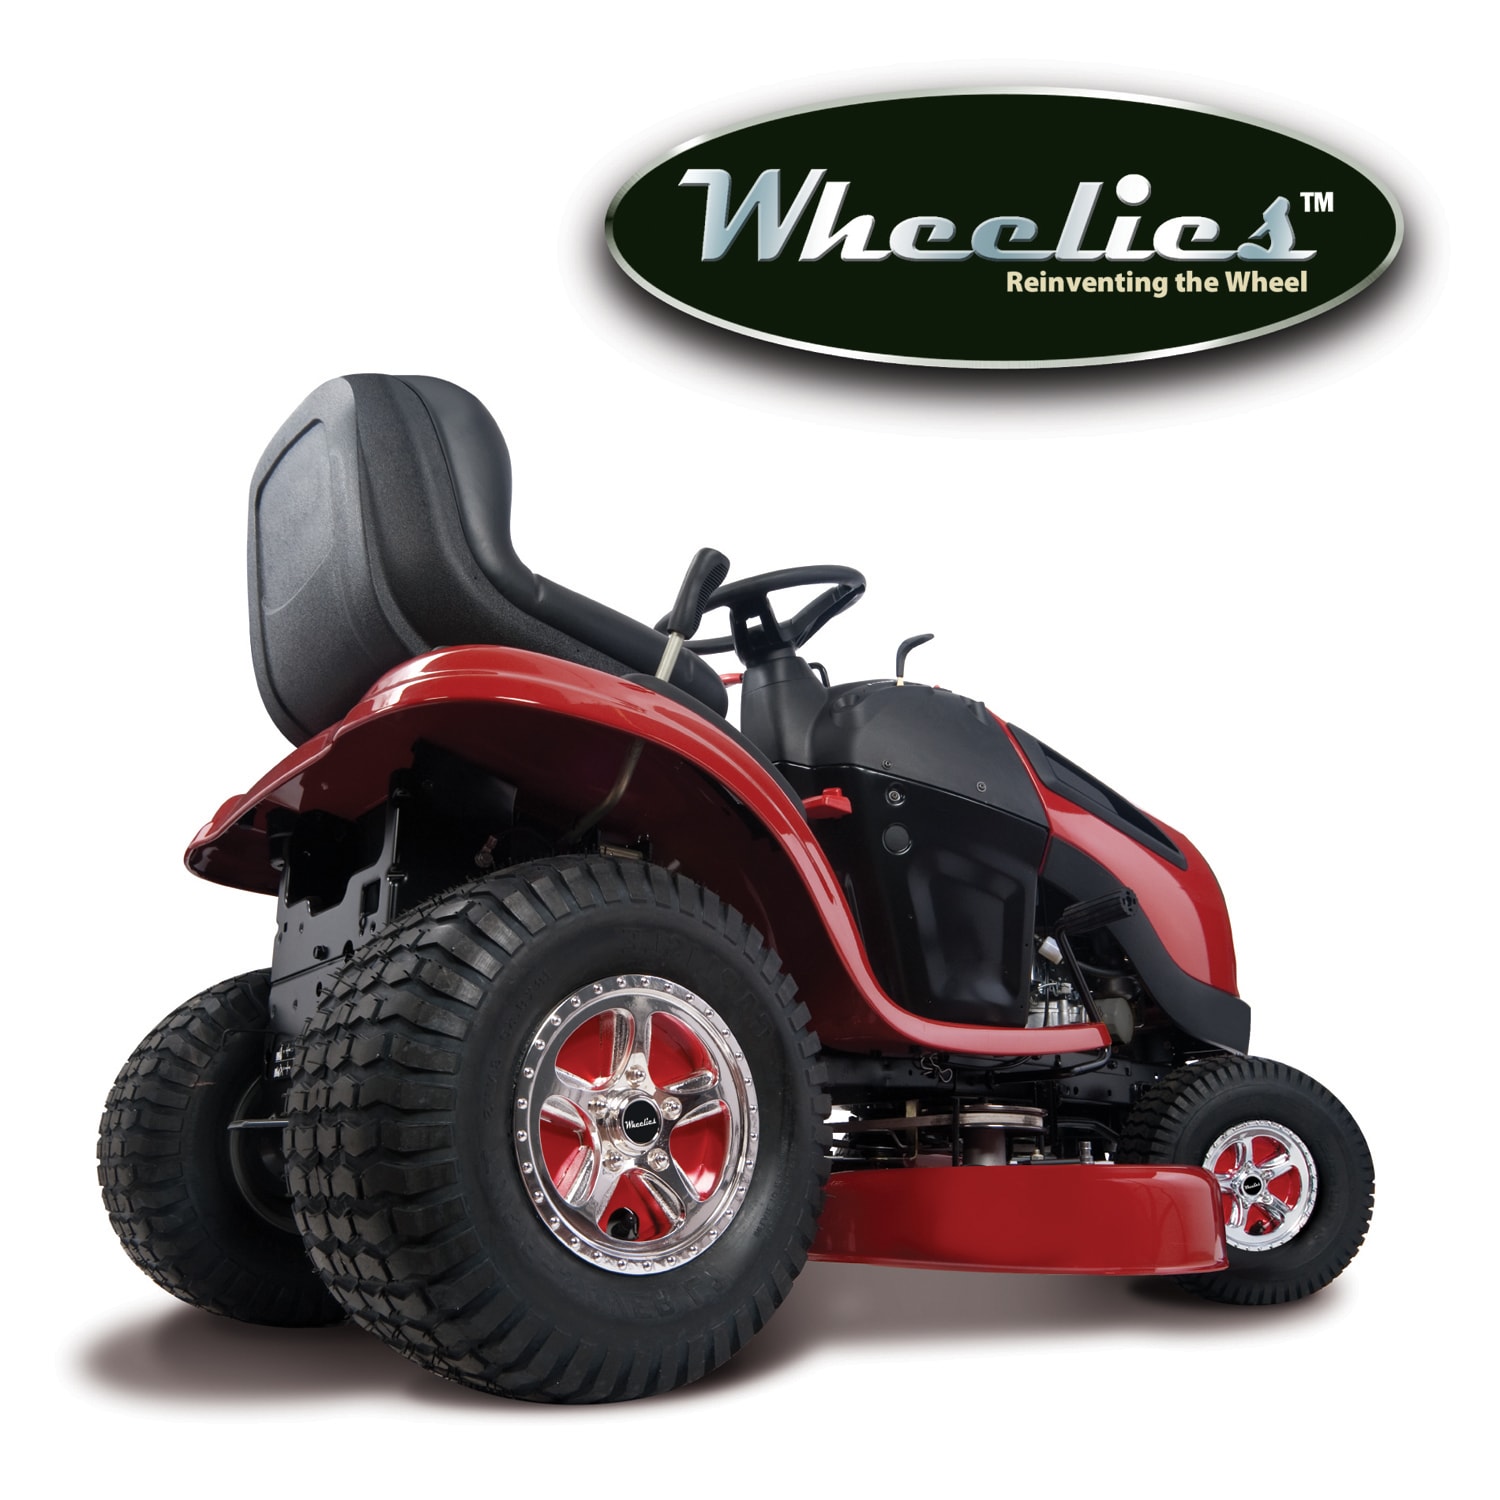 2 New Wheelies Lawn Garden Tractor Wheel Covers Hub Caps for 10" Tires GV180 